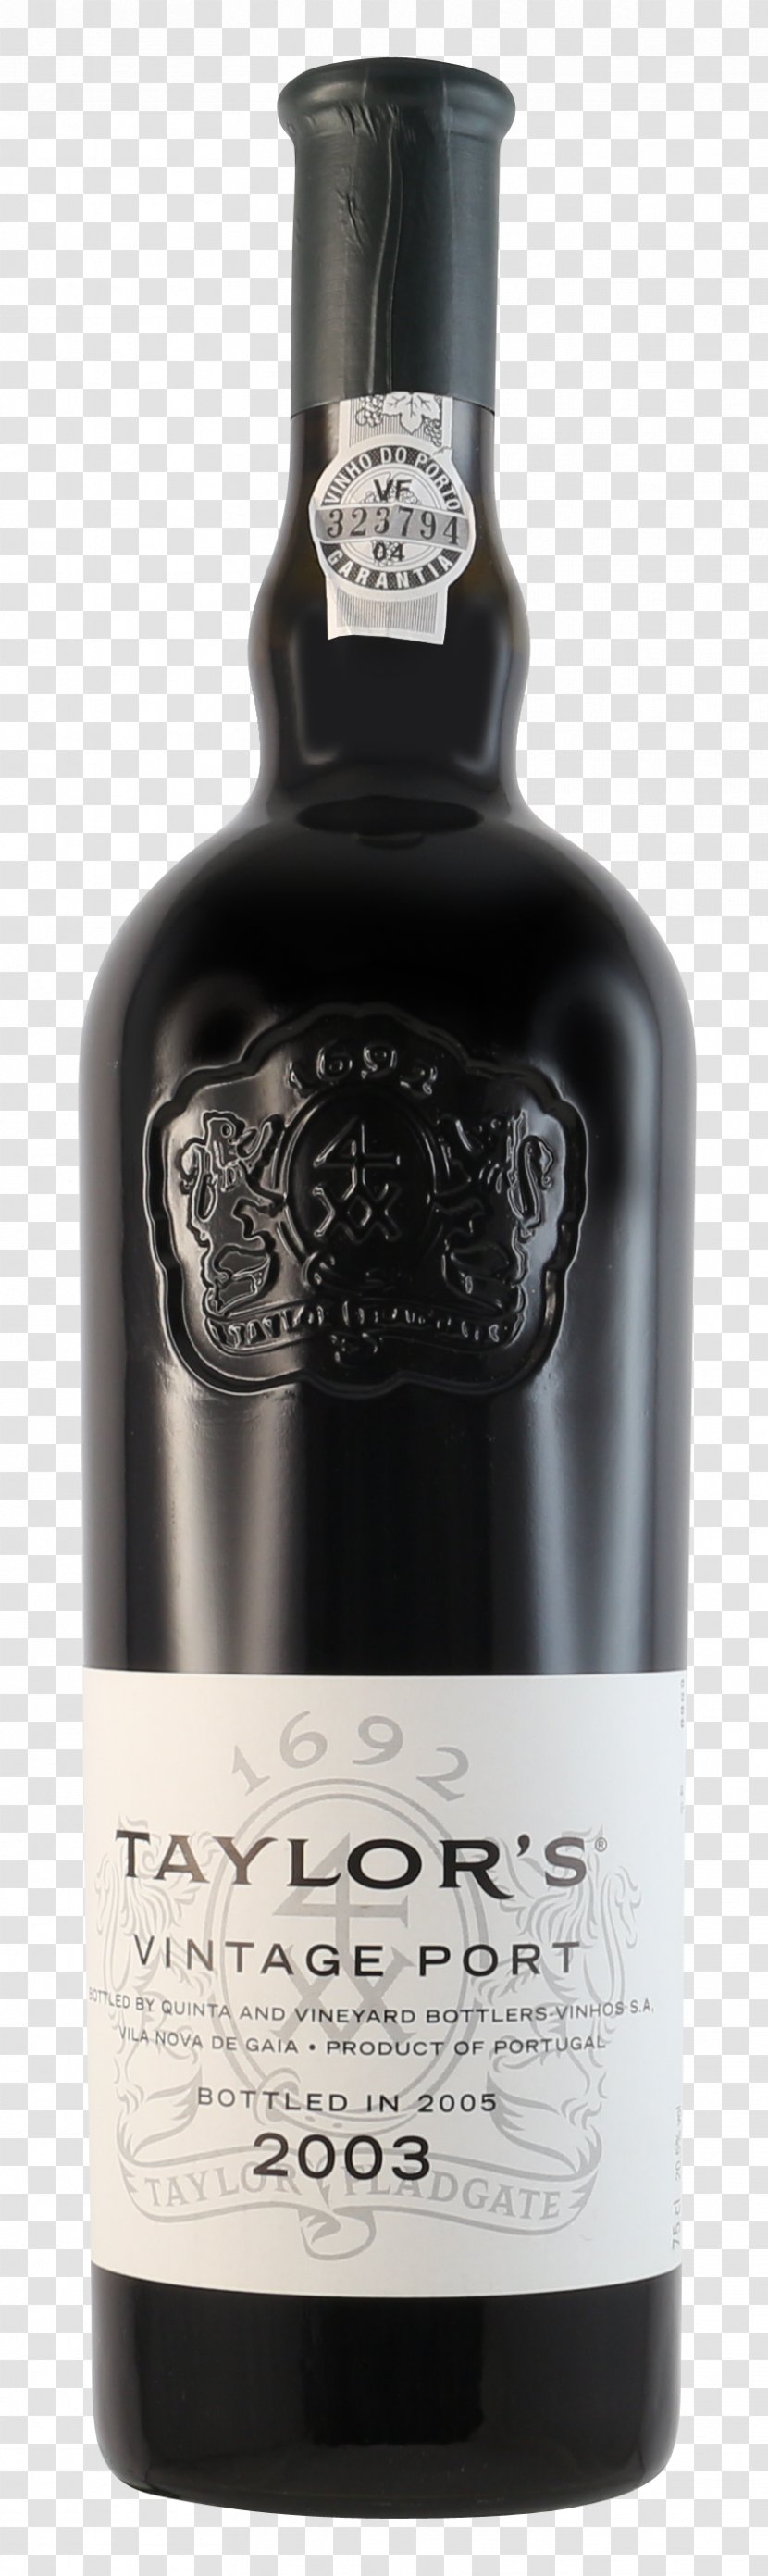 Taylor, Fladgate, & Yeatman Port Wine Alto Douro Distilled Beverage - Alcoholic Drink Transparent PNG